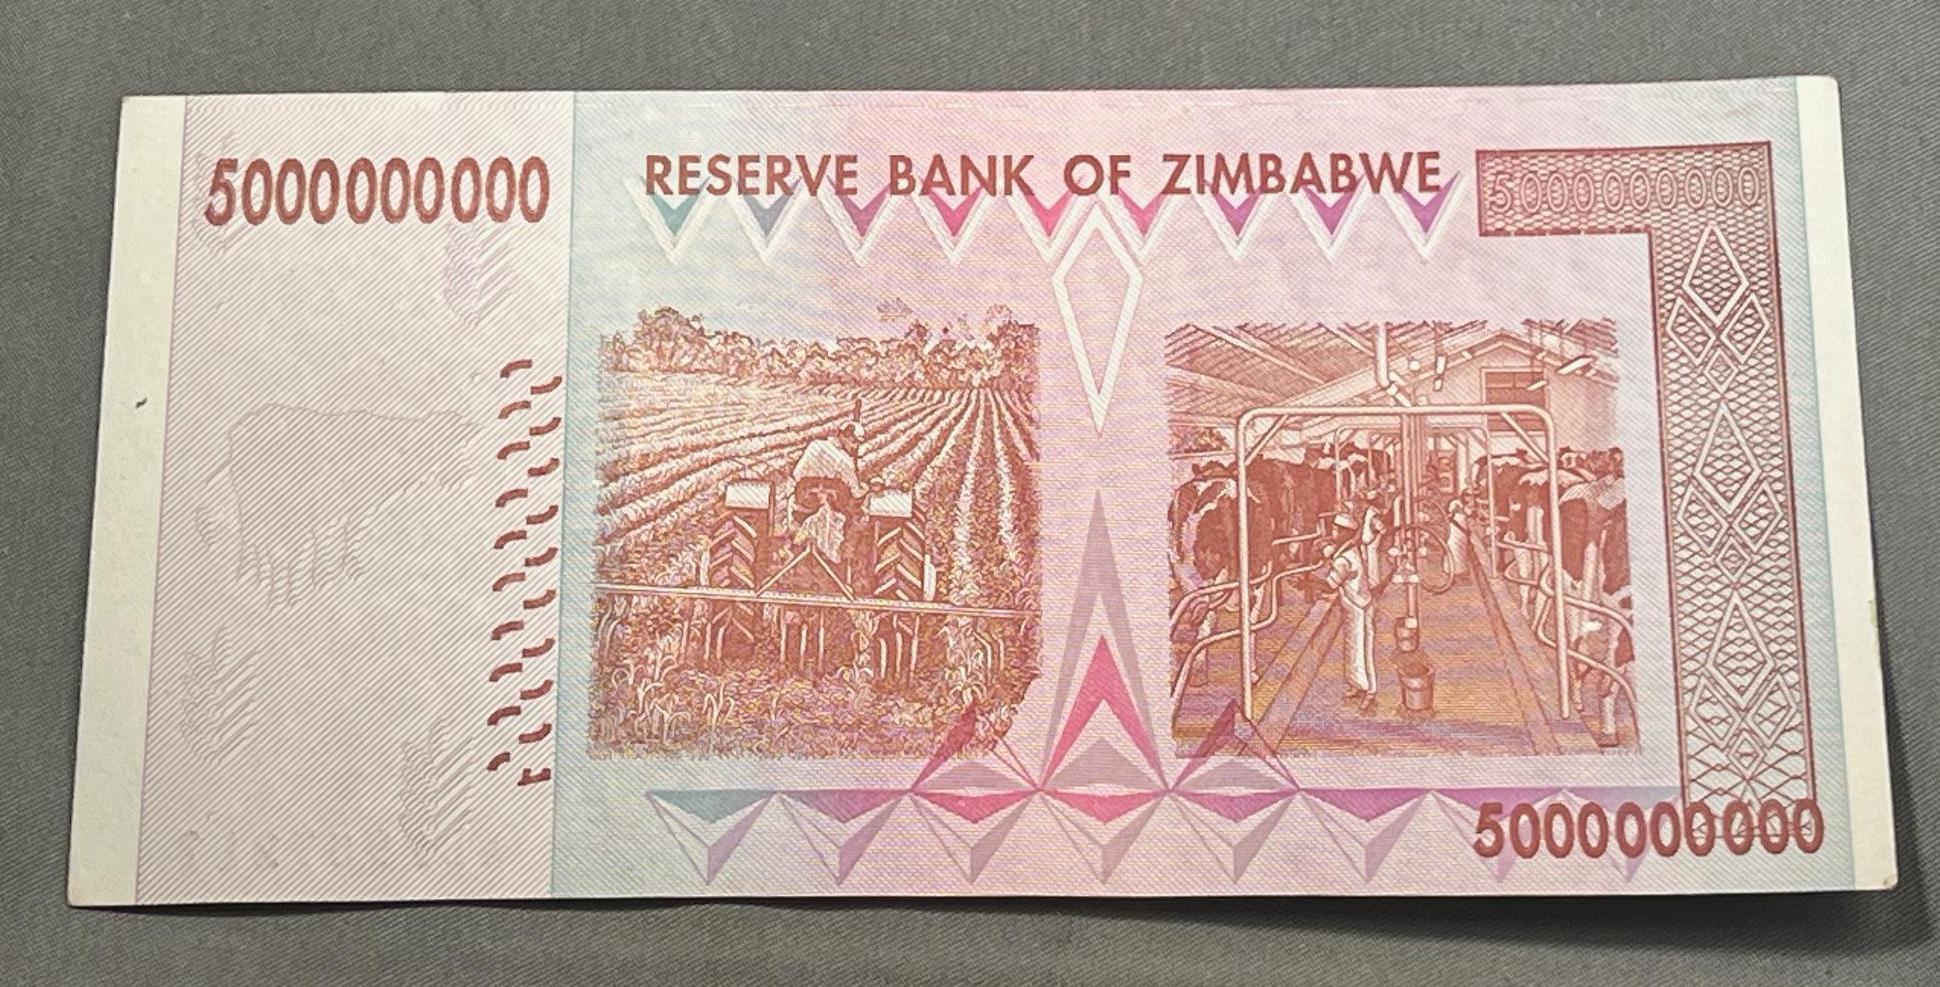 Zimbabwe 5 Billion Dollars 2008 Banknote UNC Uncirculated